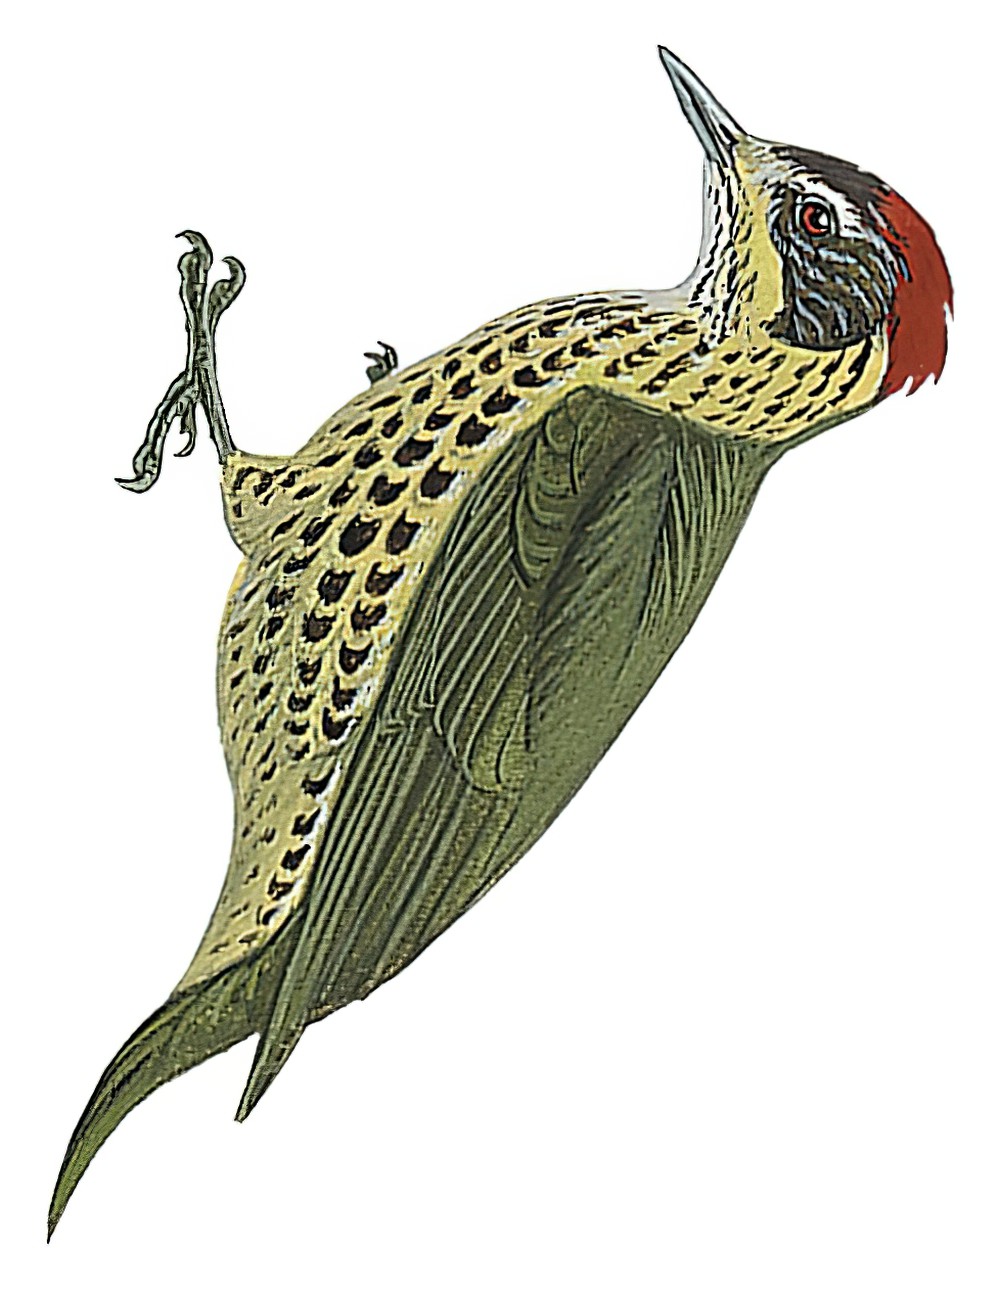 Gabon Woodpecker / Chloropicus gabonensis